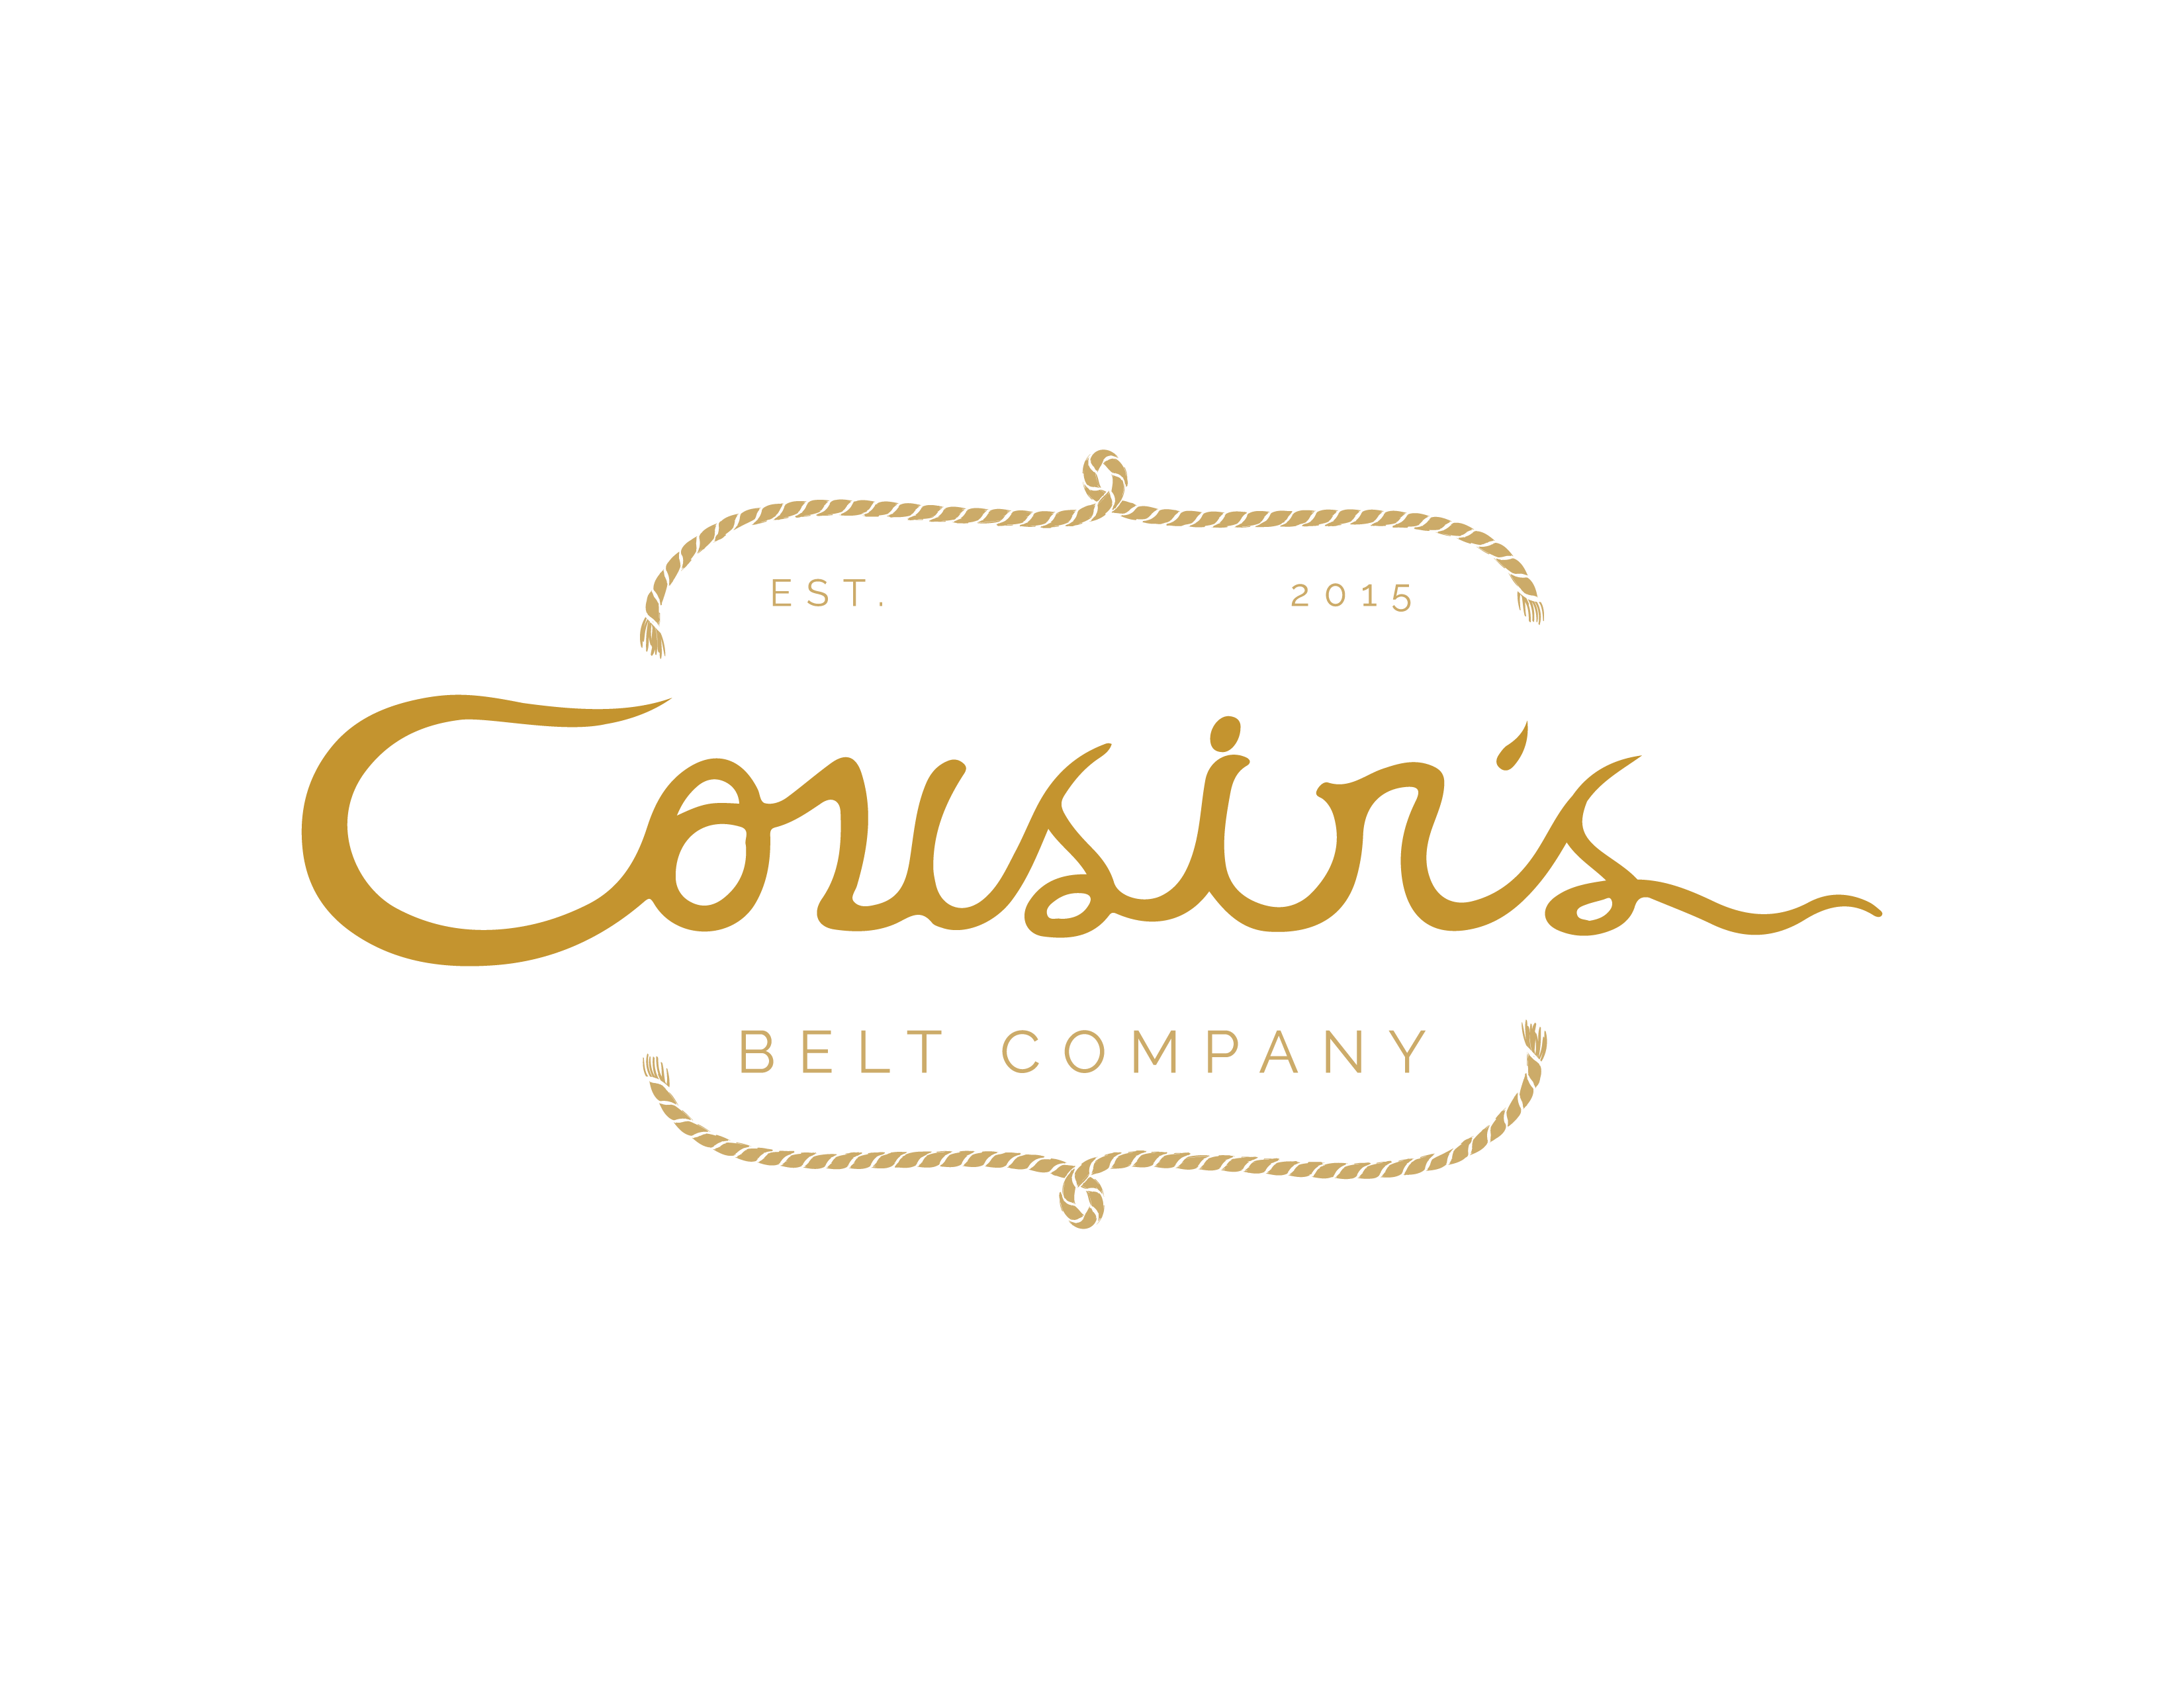 Cousin's Belt Company